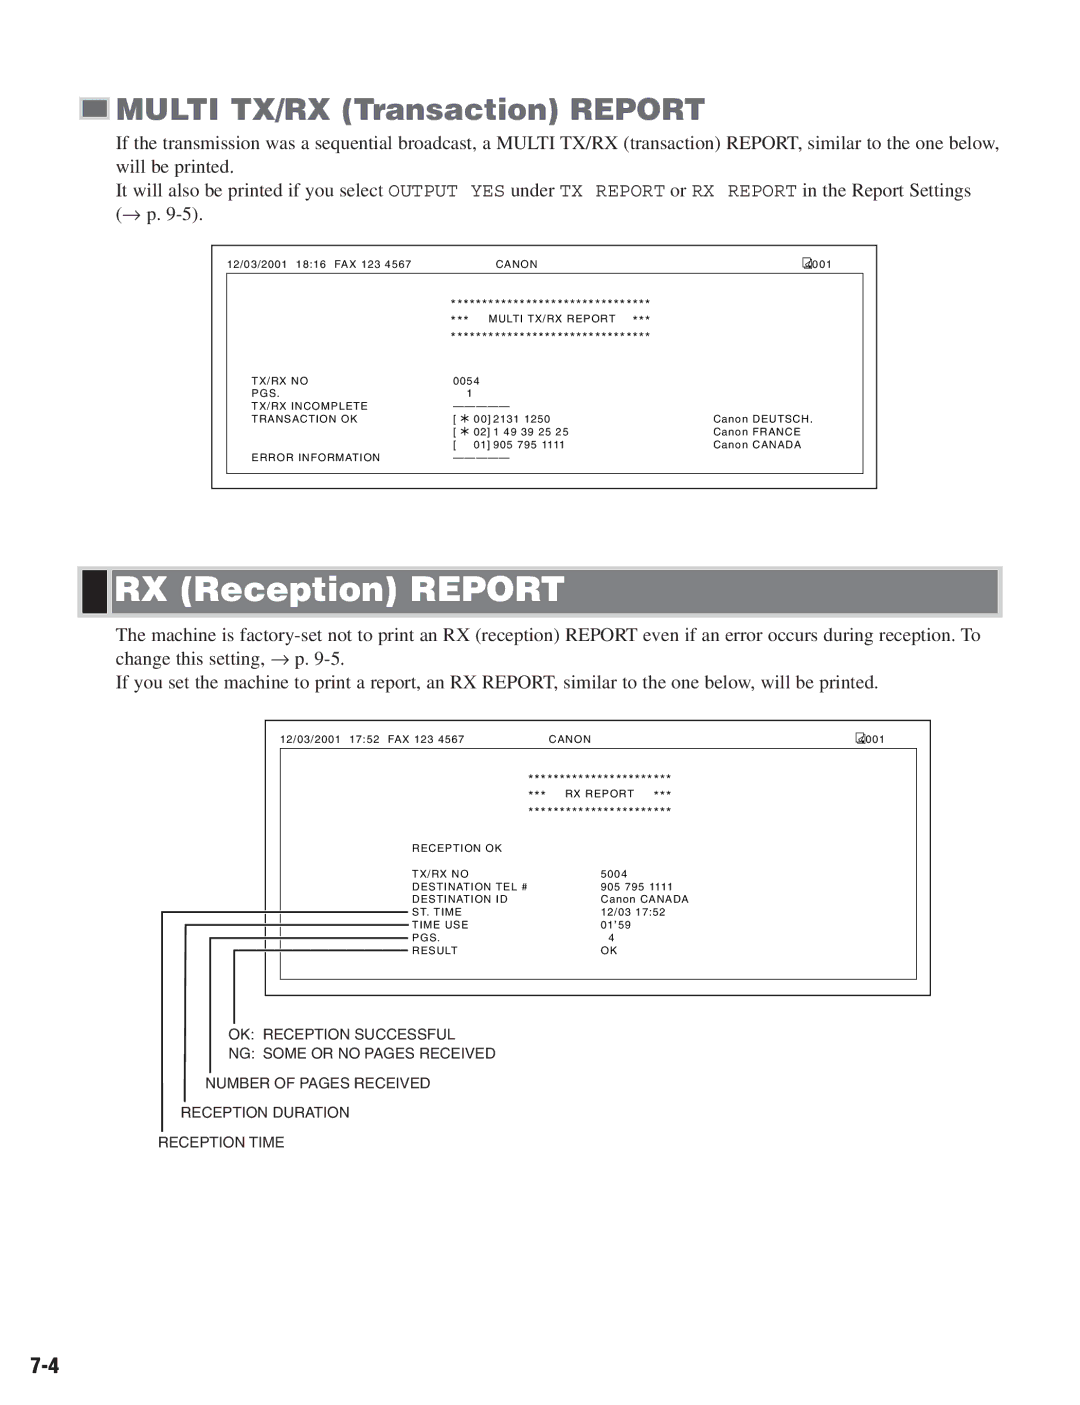 Canon D680 manual RX Reception Report, Multi TX/RX Transaction Report 